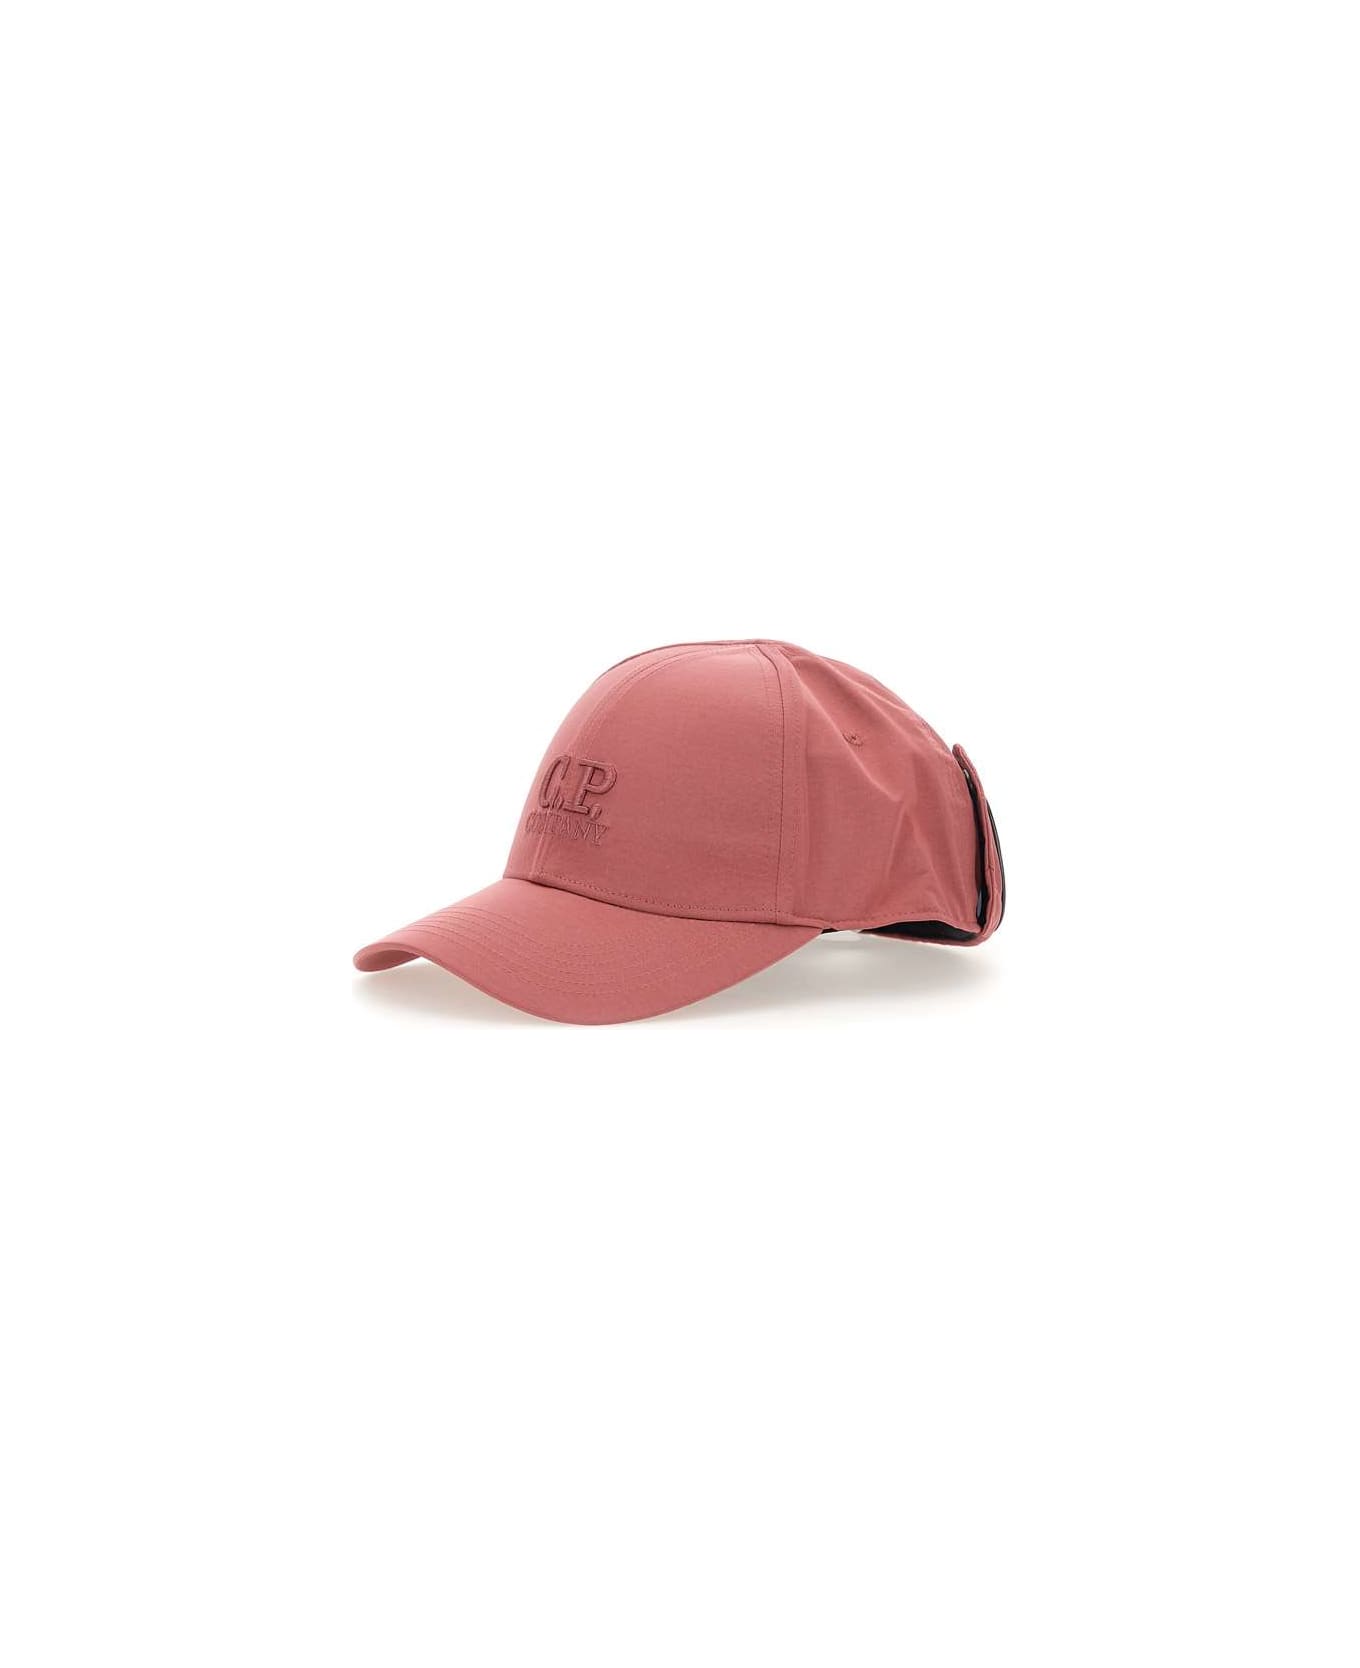 C.P. Company "chrome" Baseball Hat - PINK 帽子